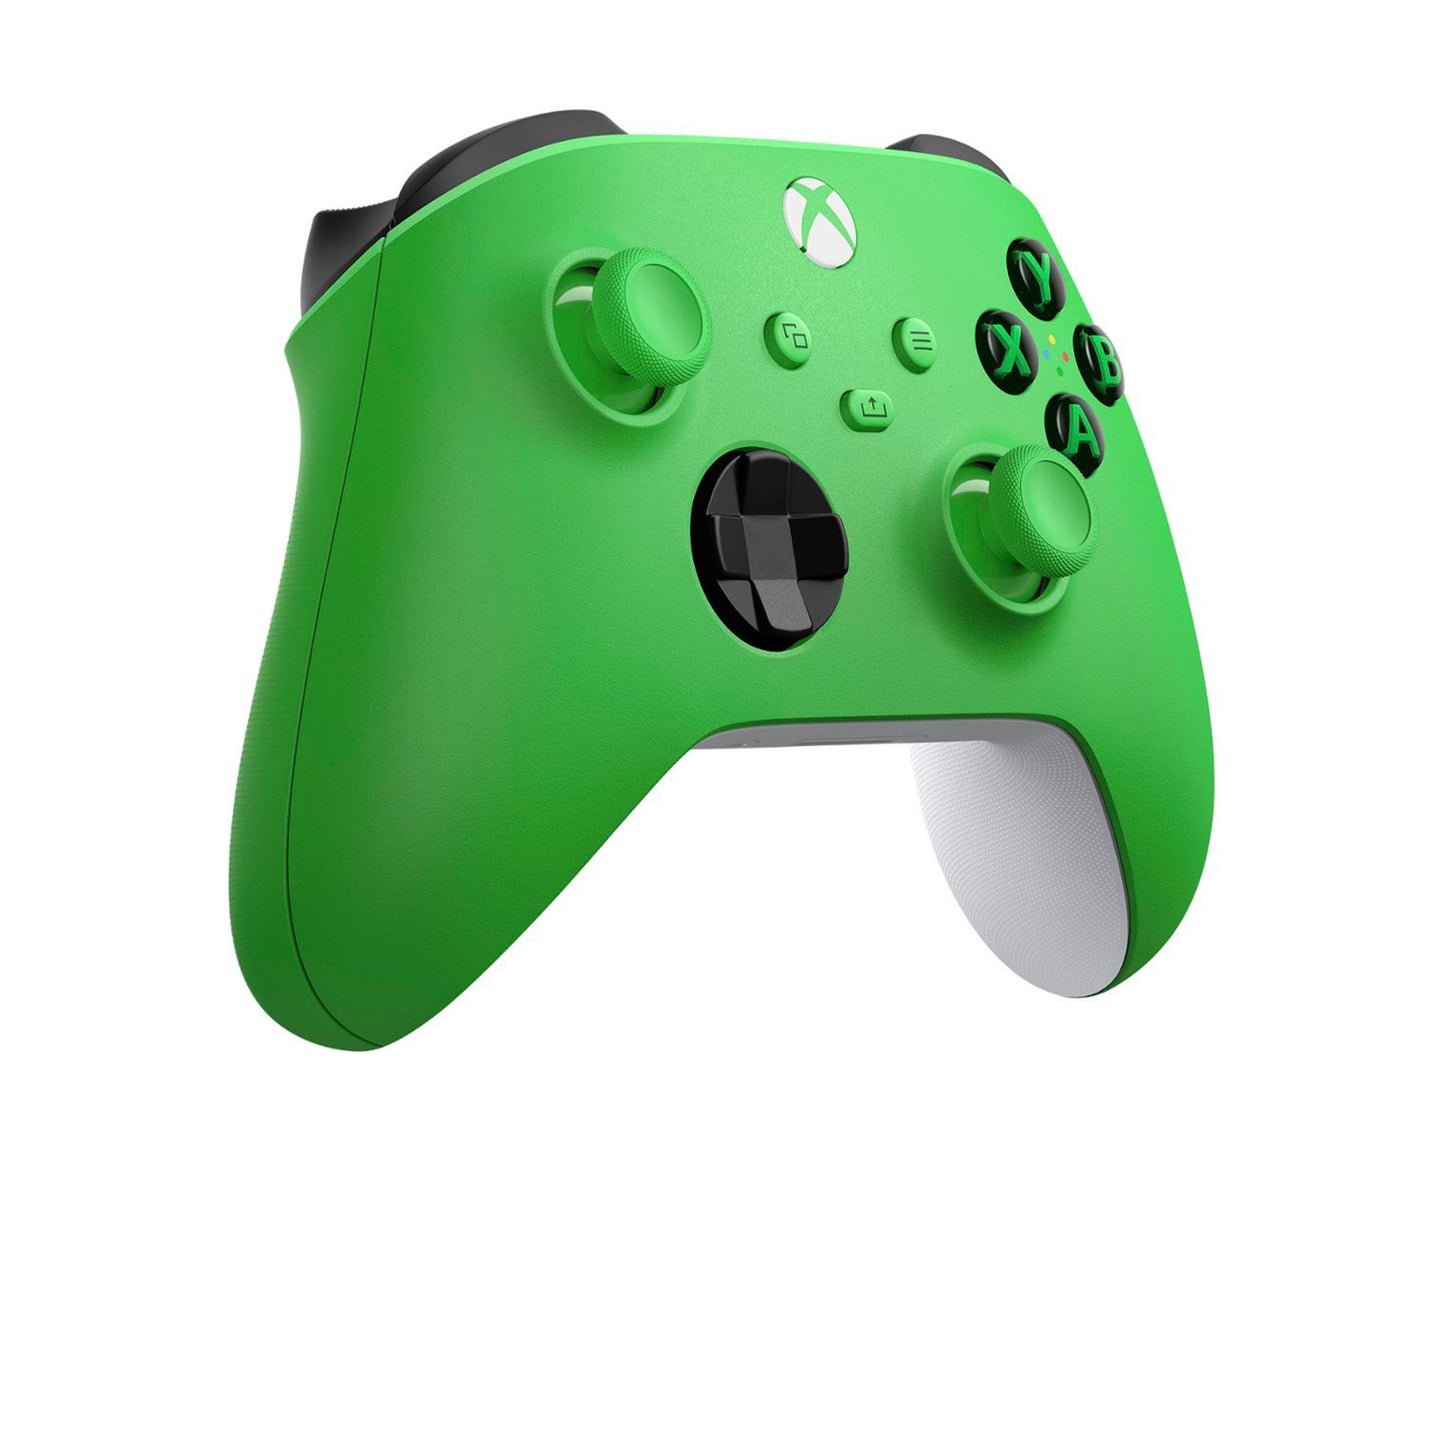 Microsoft - وحدة تحكم Xbox اللاسلكية لأجهزة Xbox Series X وXbox Series S وXbox One وأجهزة Windows - Velocity Green 